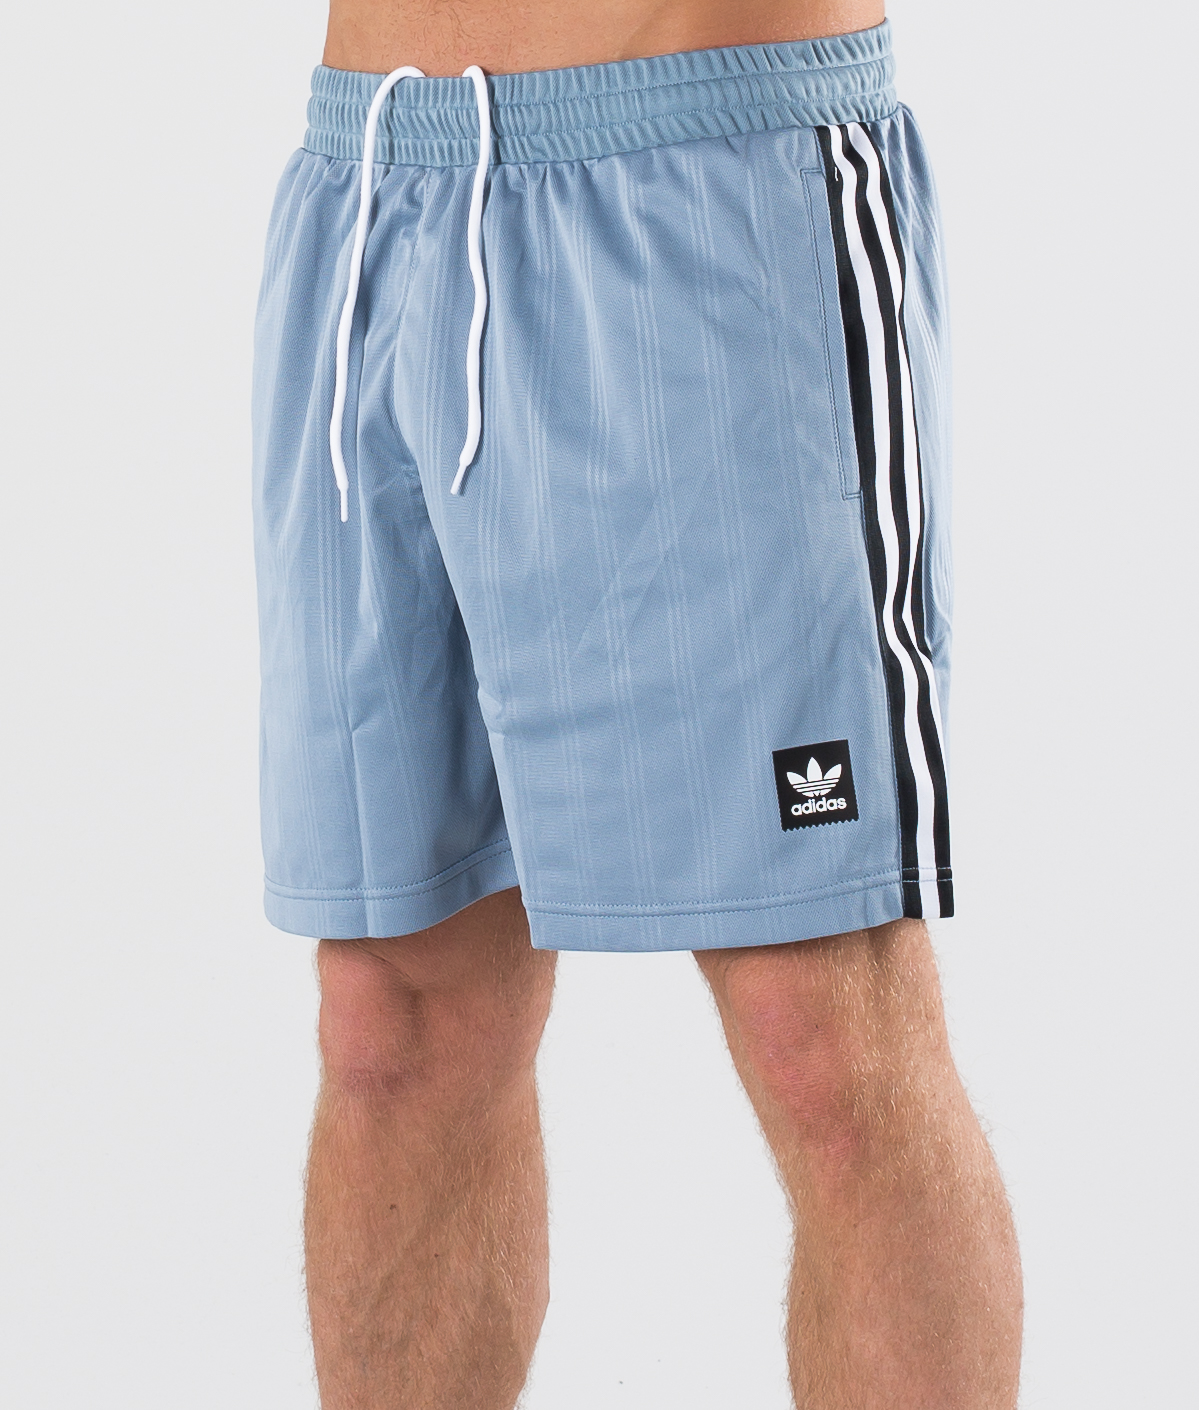 clatsop shorts